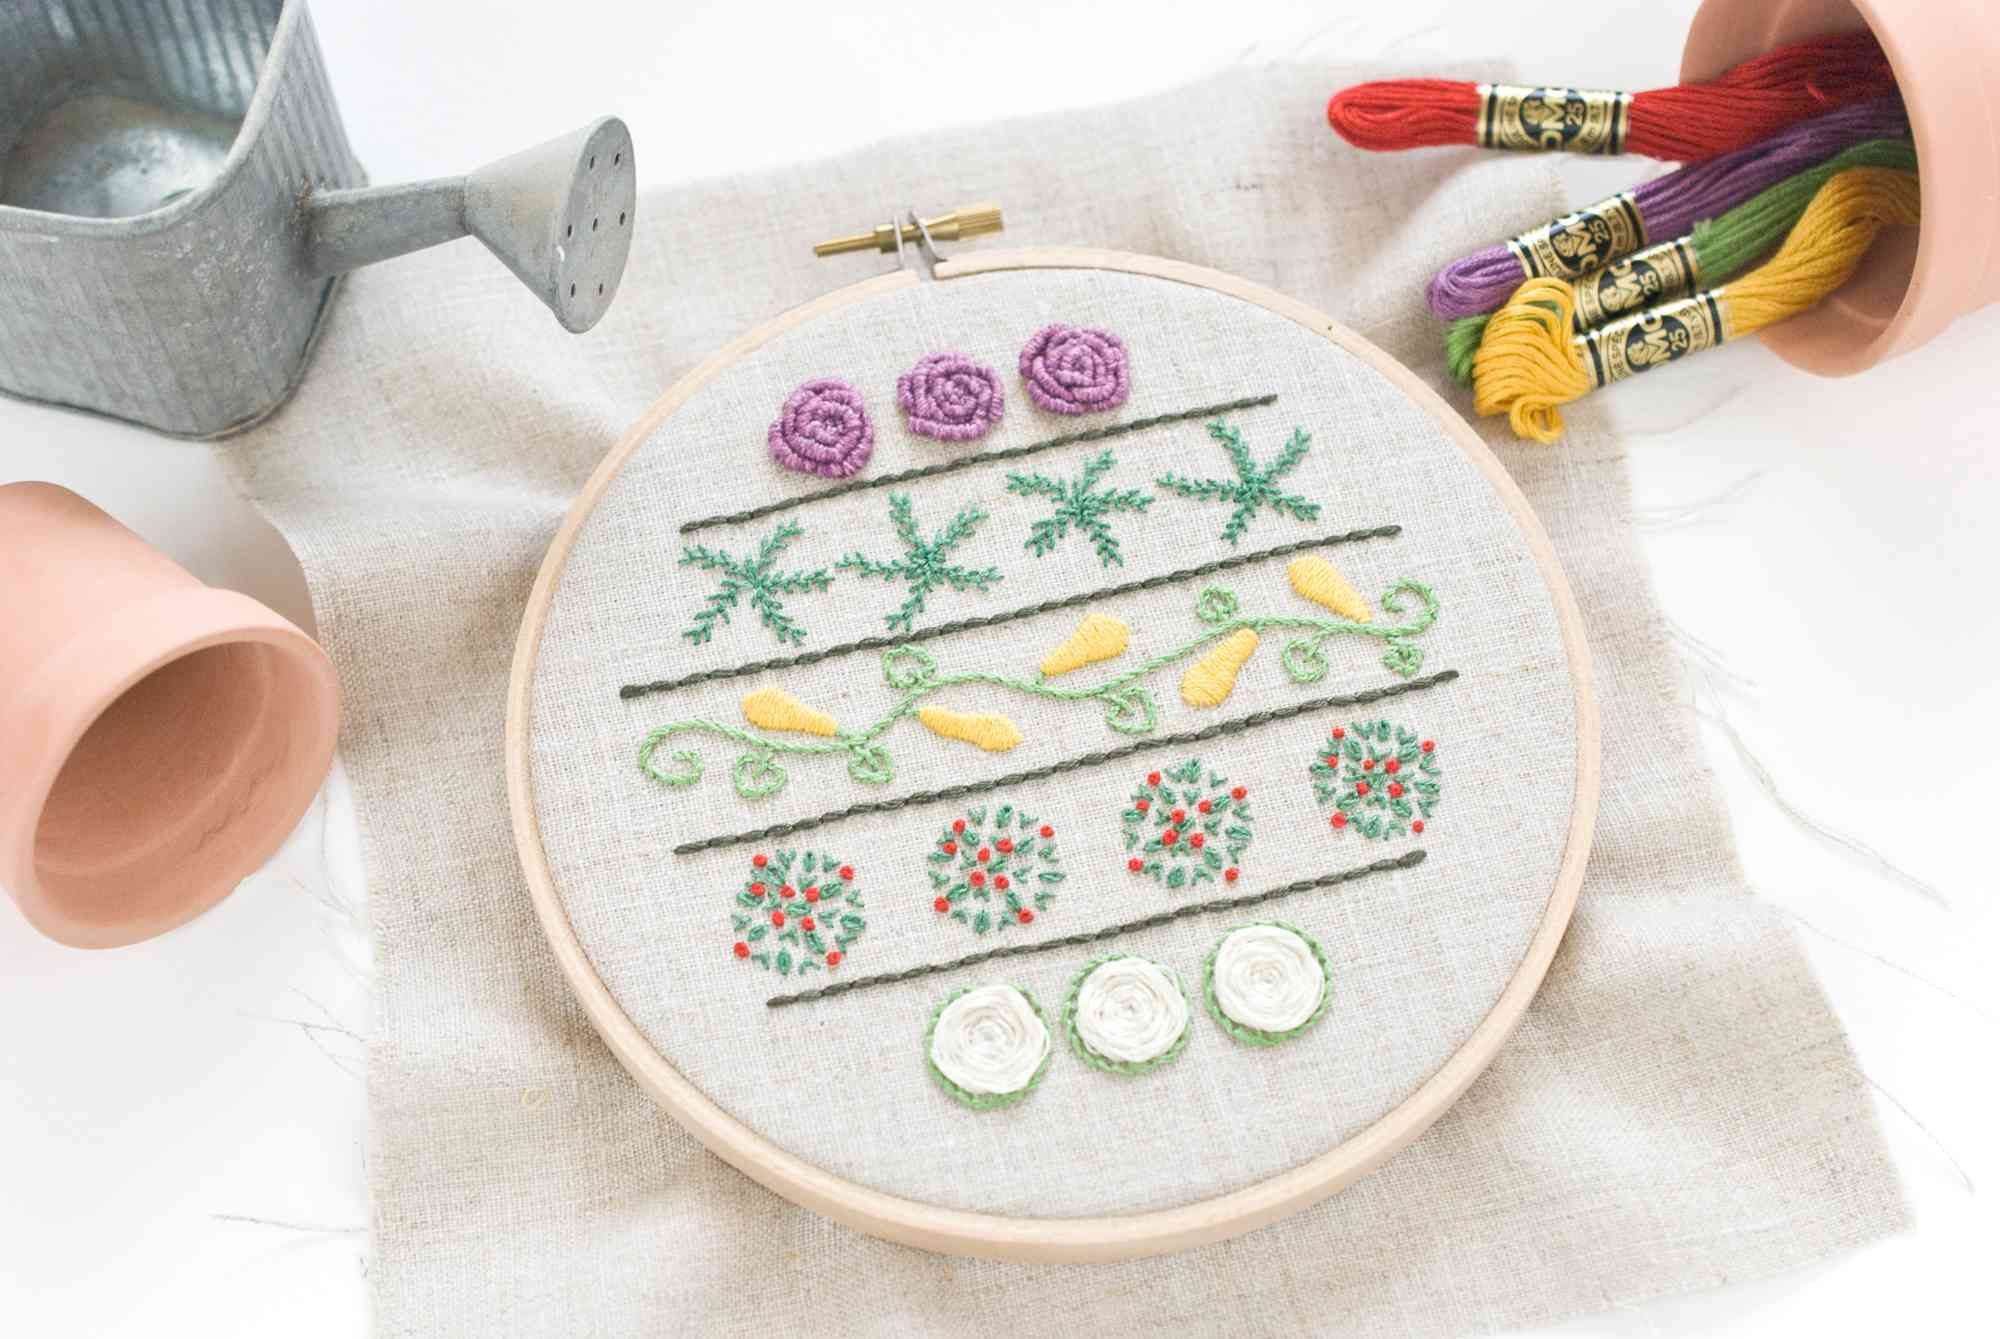 Embroidery Sampler Patterns 8 Embroidery Sampler Patterns